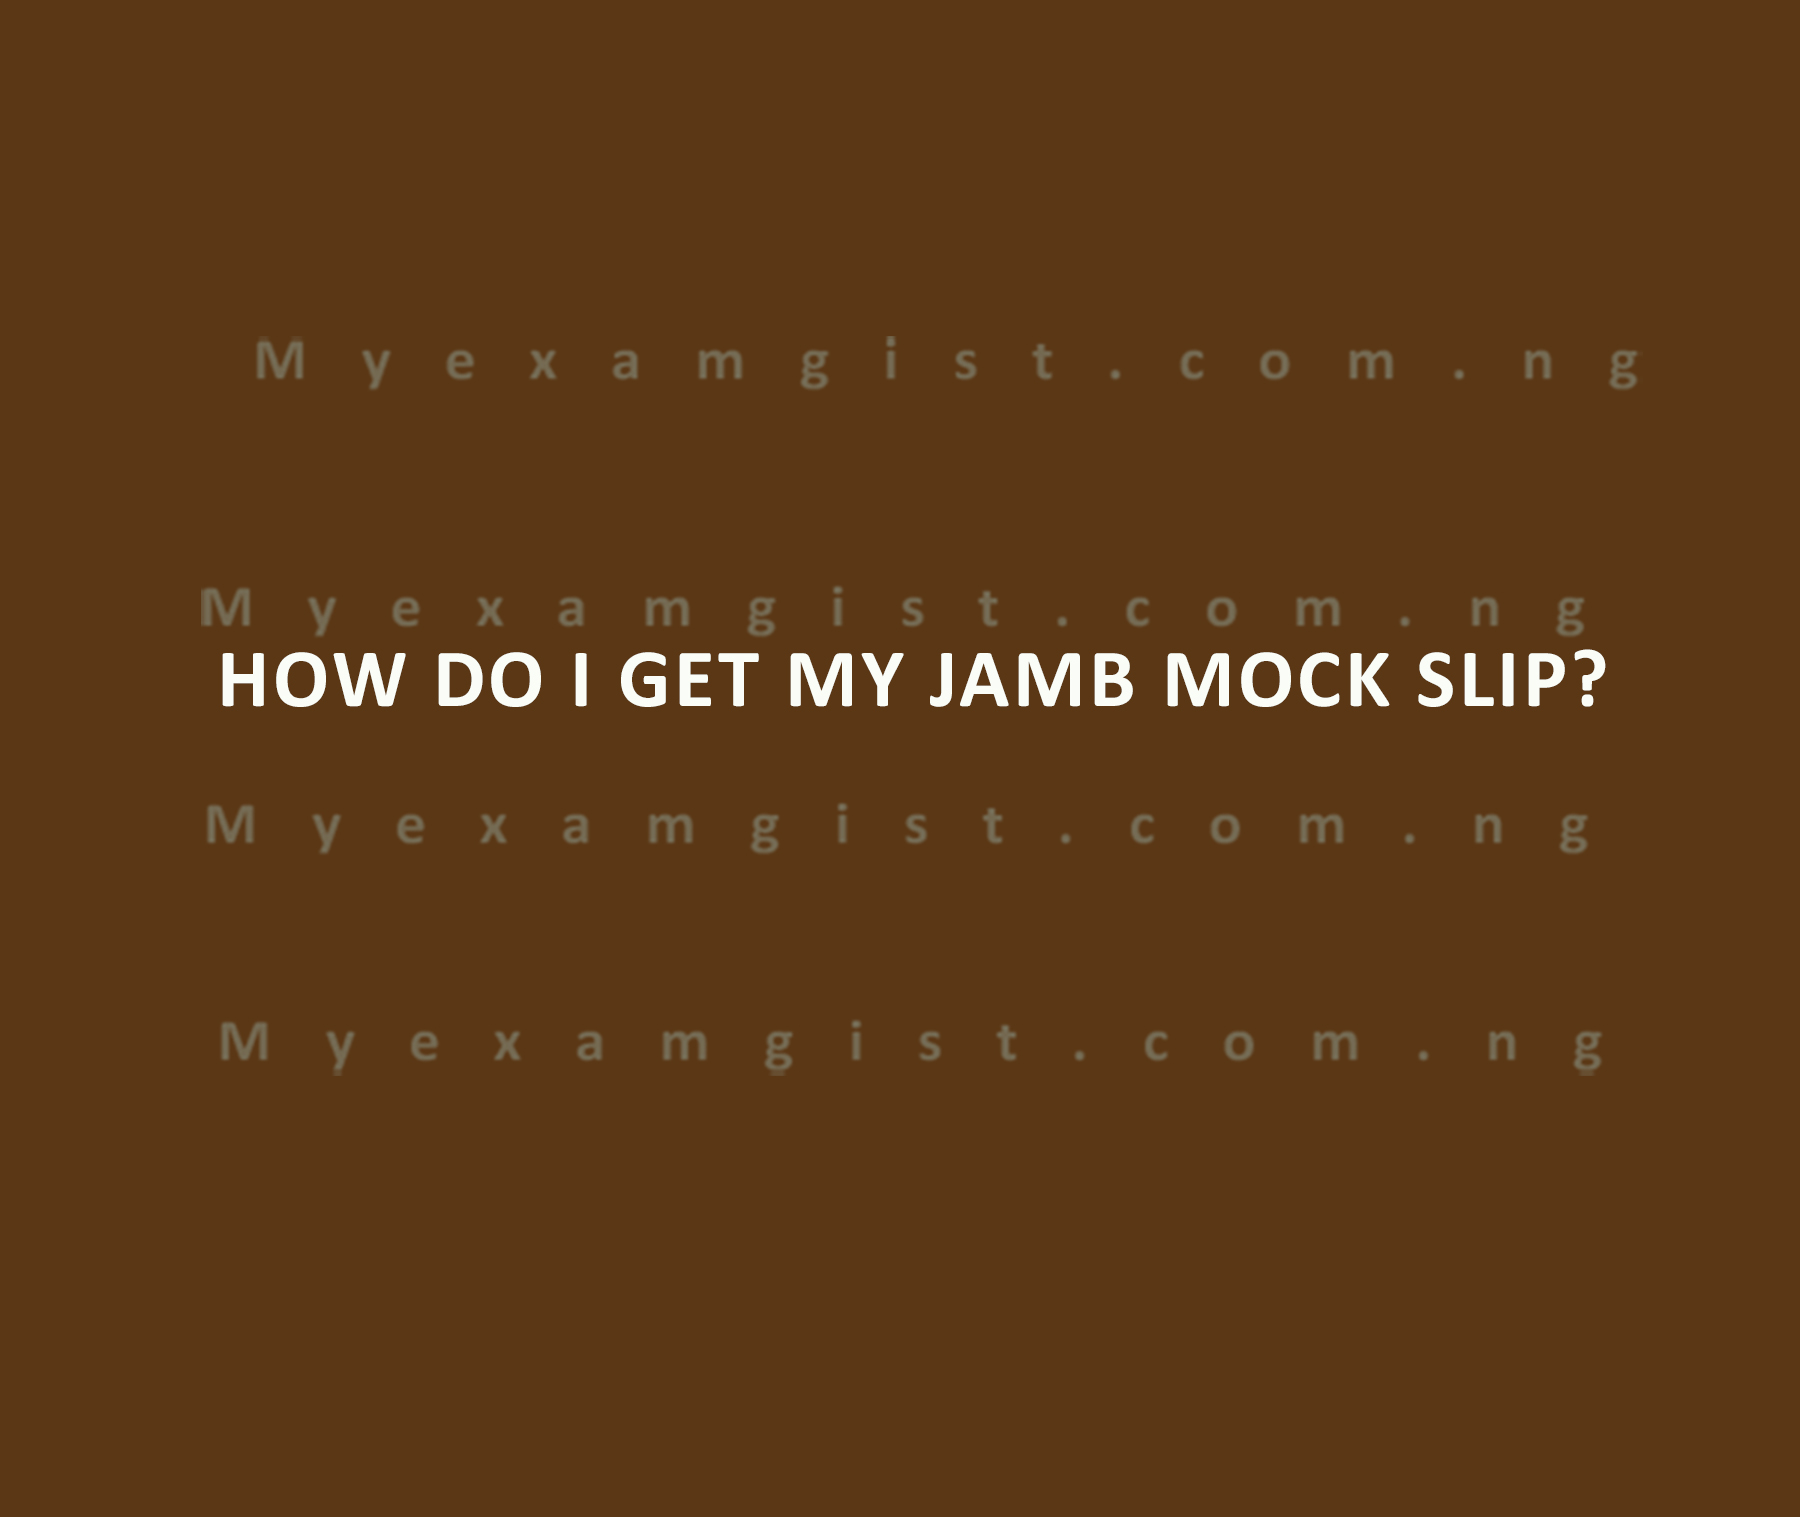 How do I get my jamb mock slip?